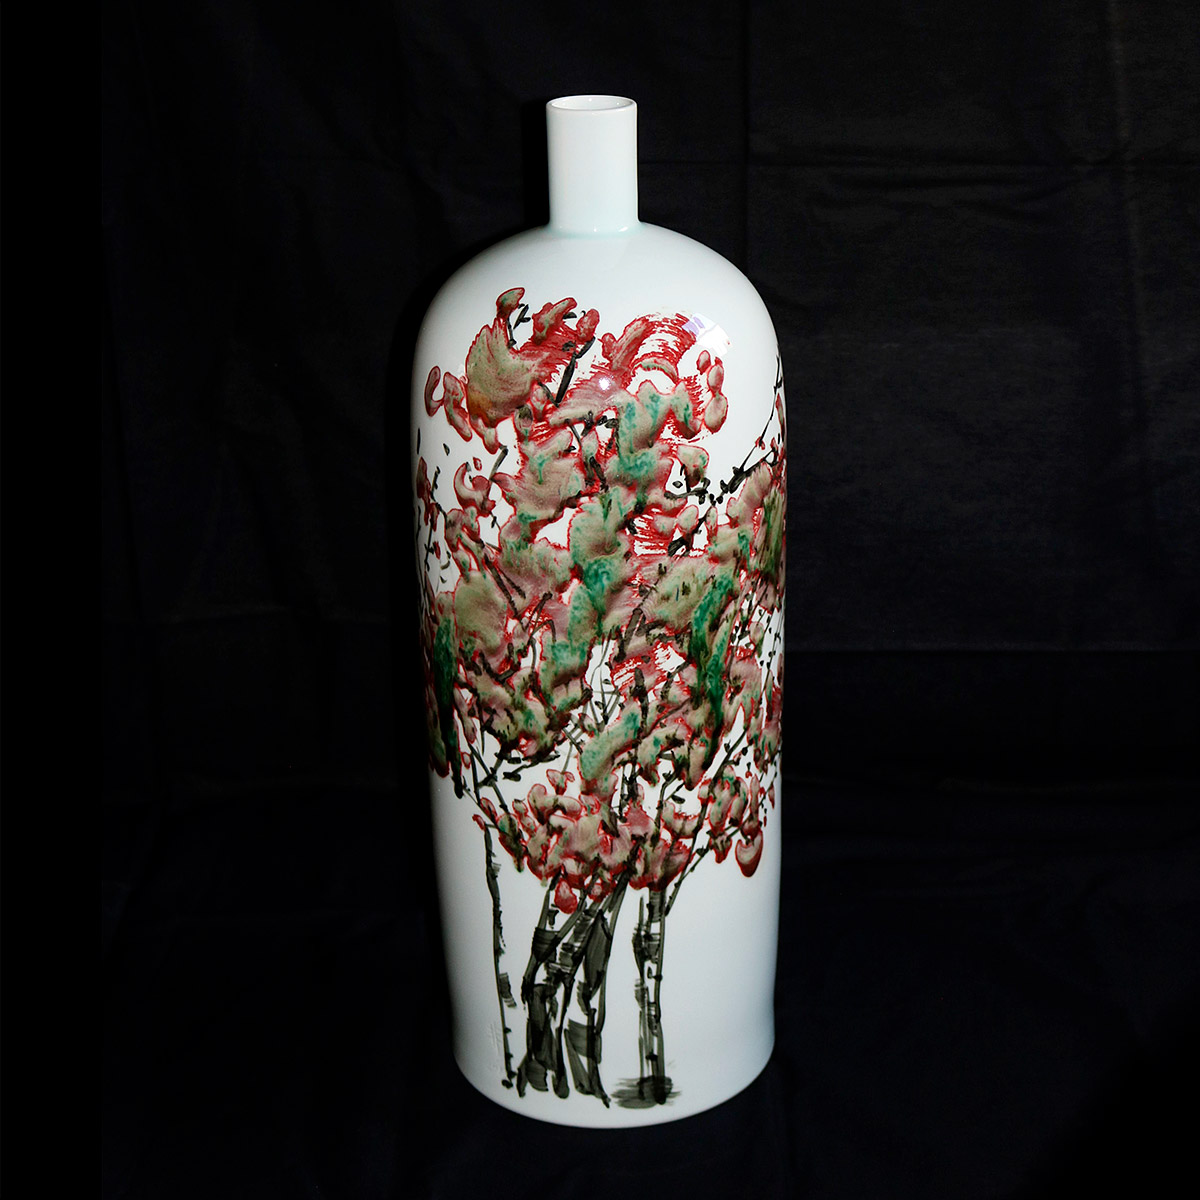 NewingerART: "Untitled vase 3" (Wei Ping)